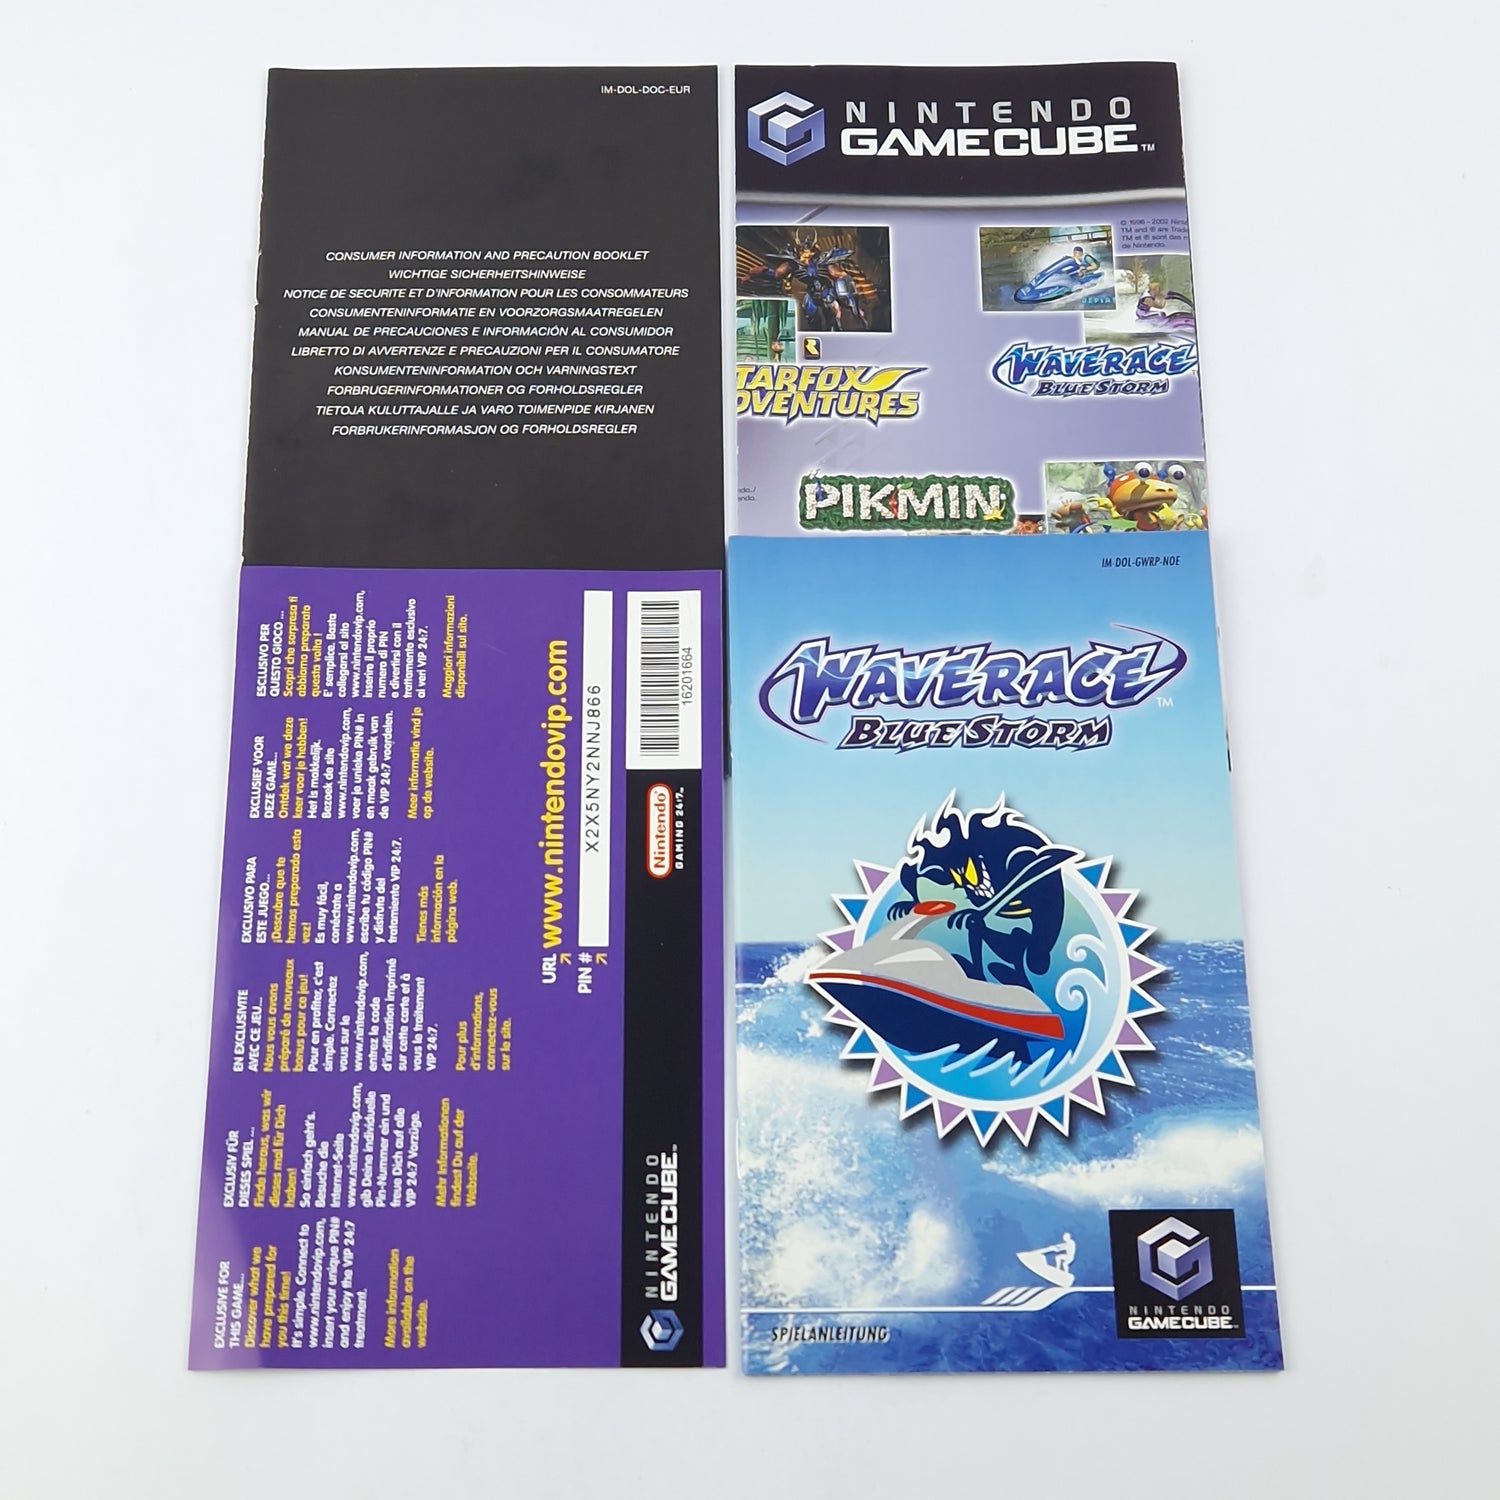 Nintendo Gamecube game: Wave Race Blue Storm - CD instructions OVP cib / PAL GC